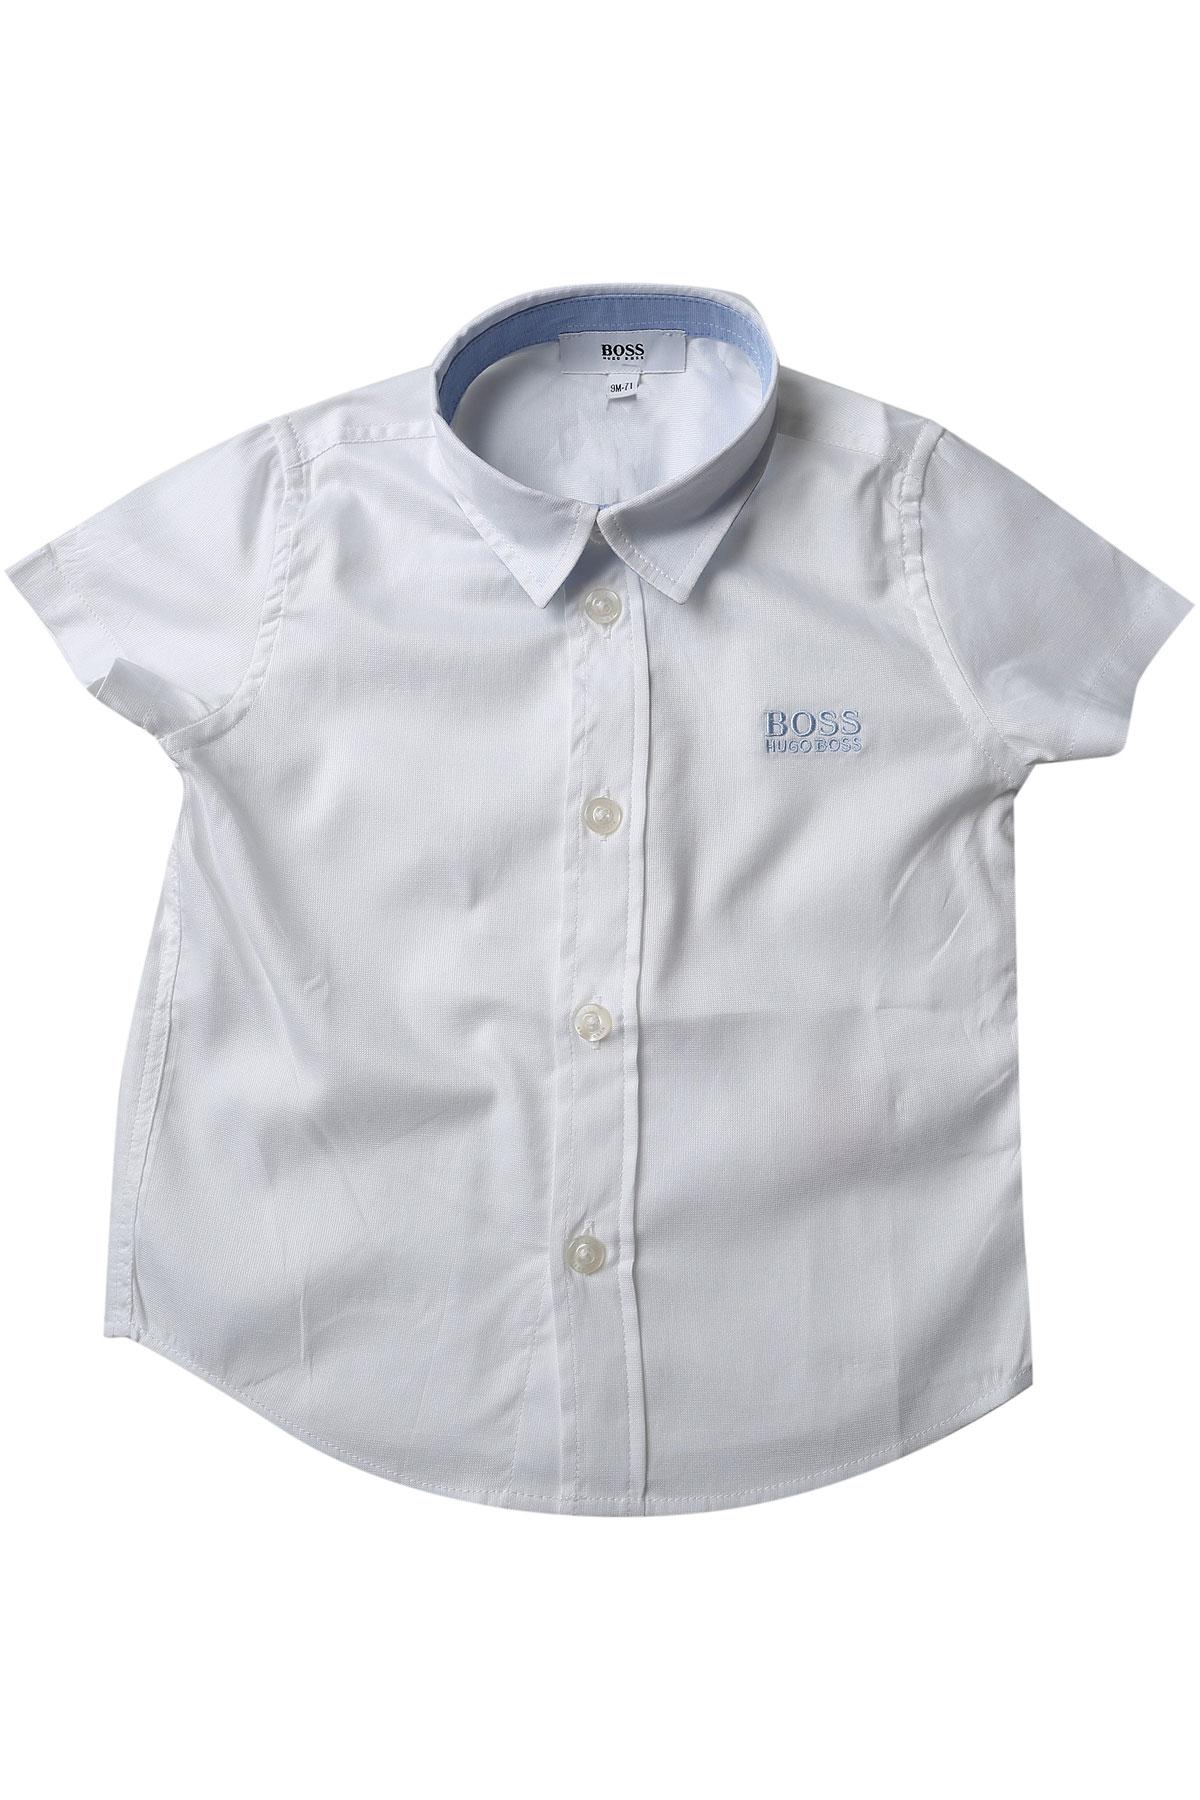 hugo boss baby boy clothes sale